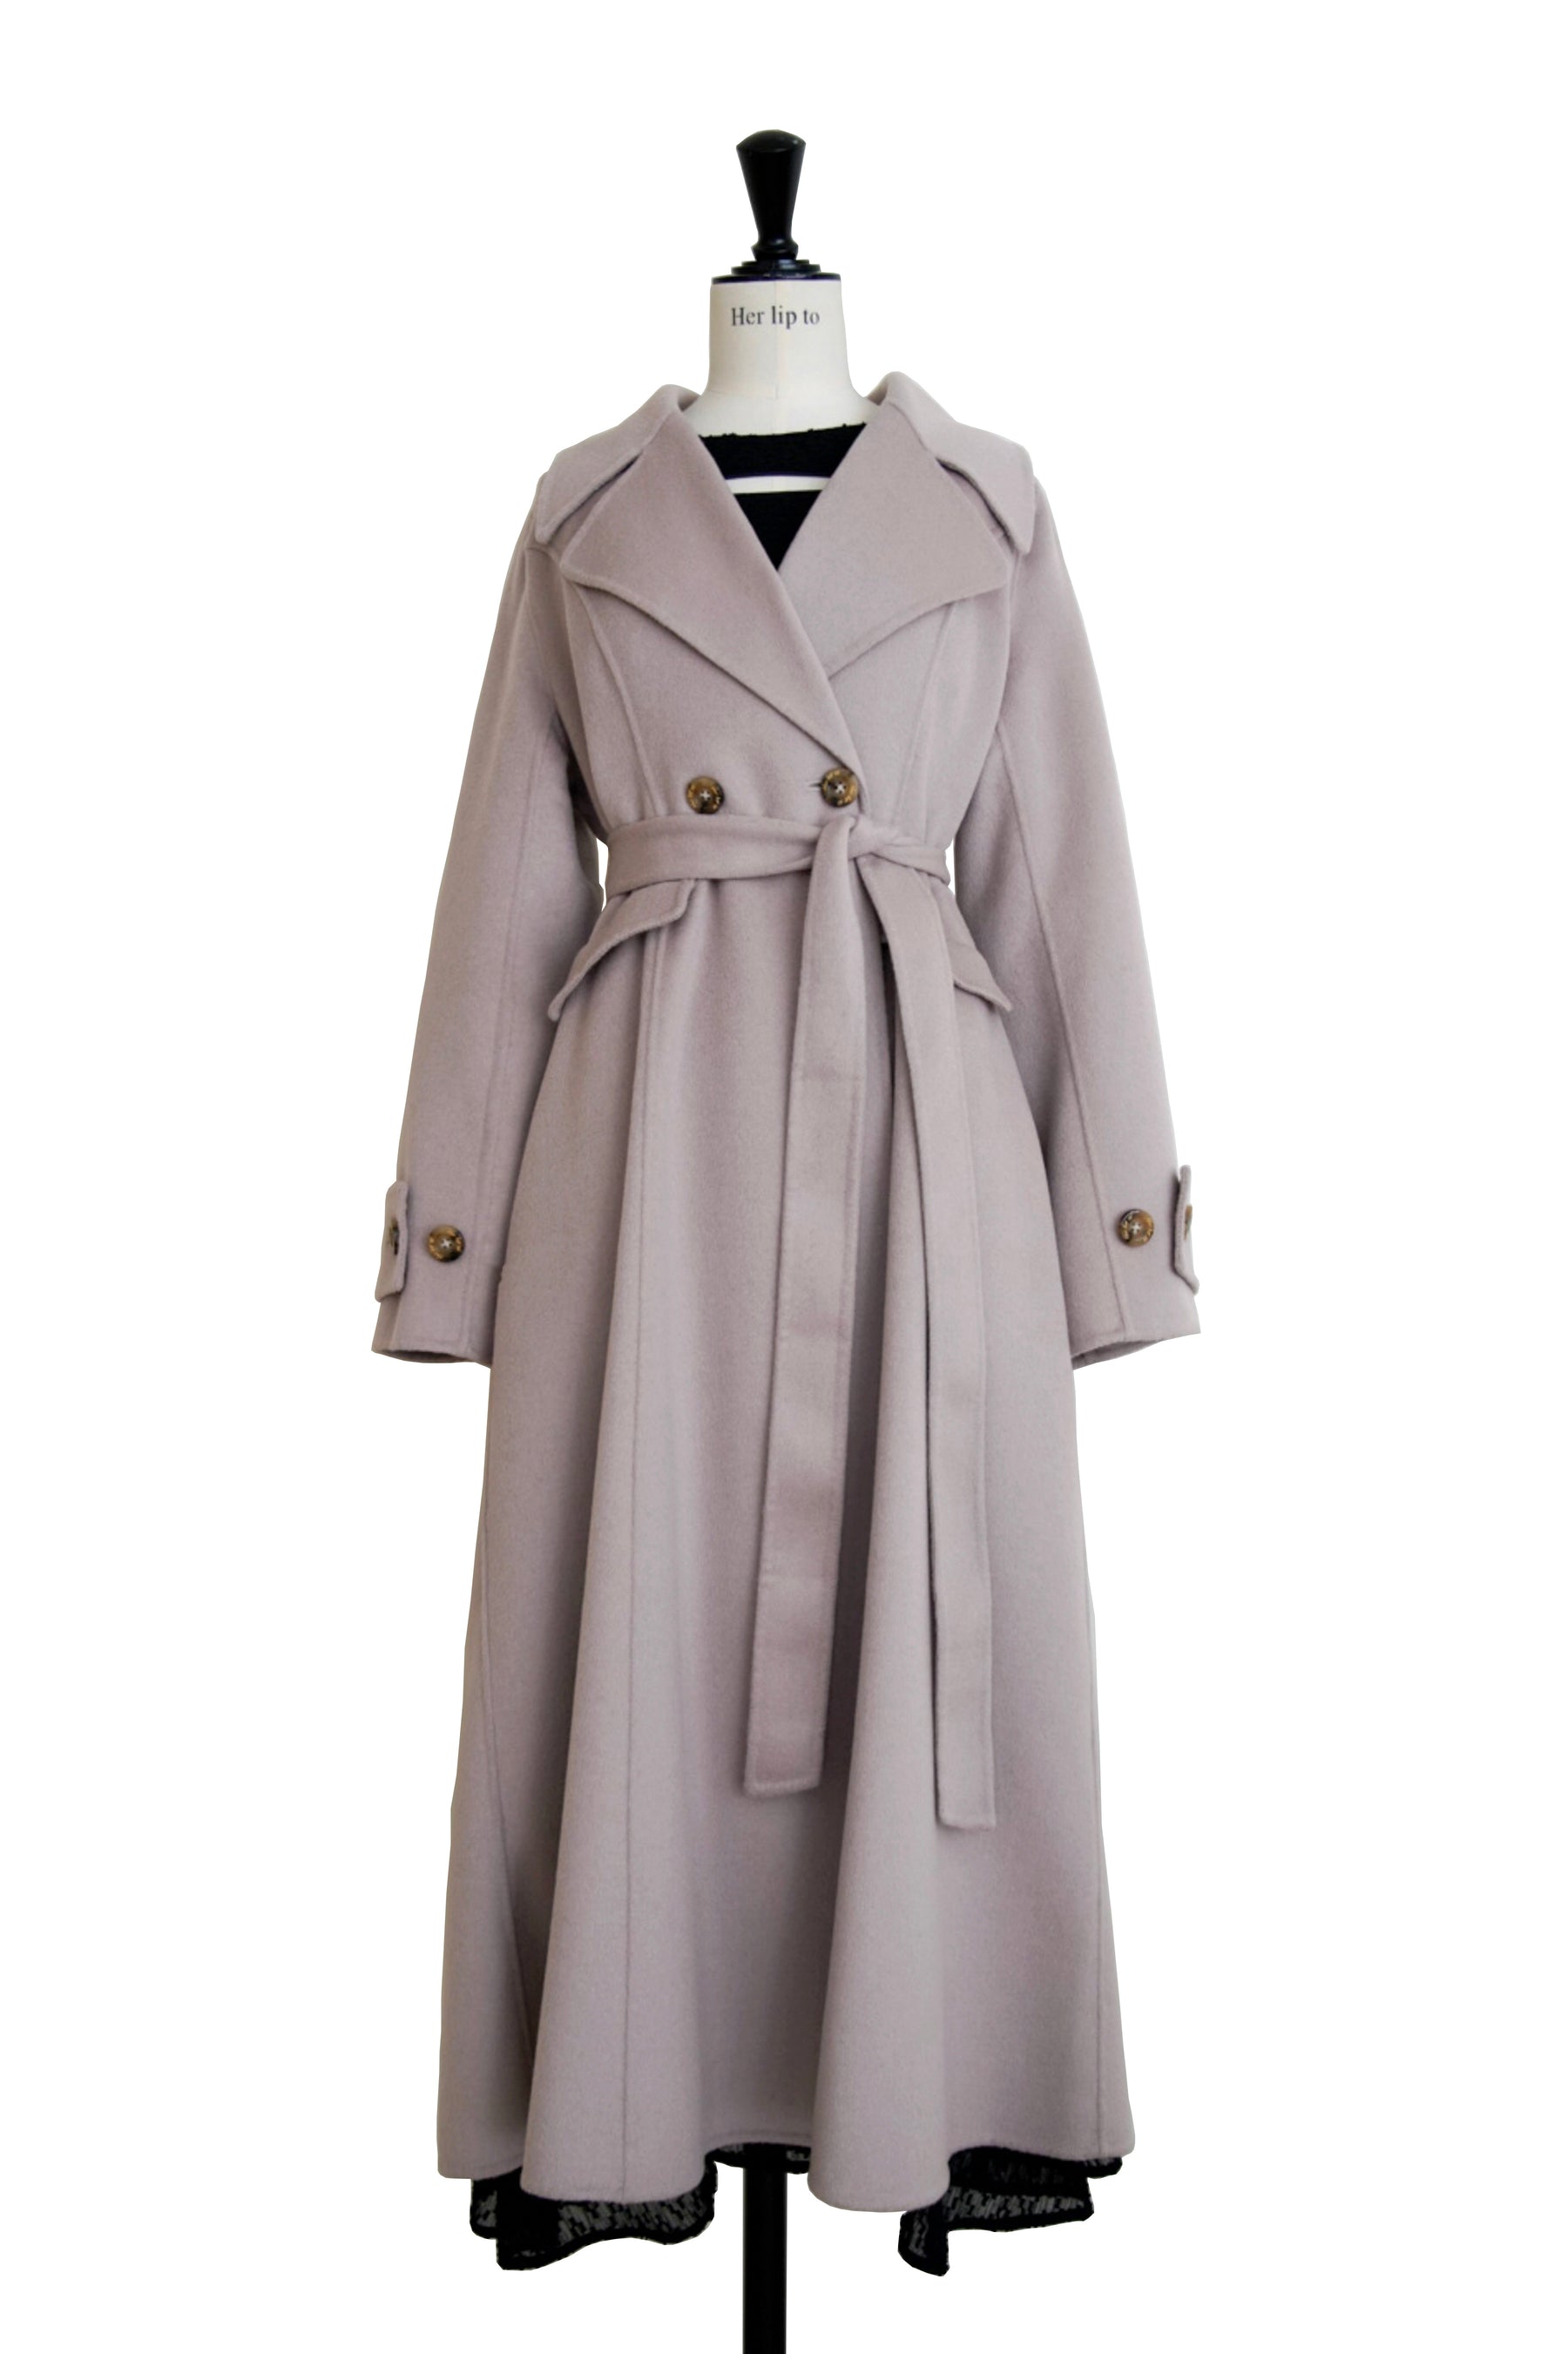 herlipto Hamilton Wool River Dress Coat-